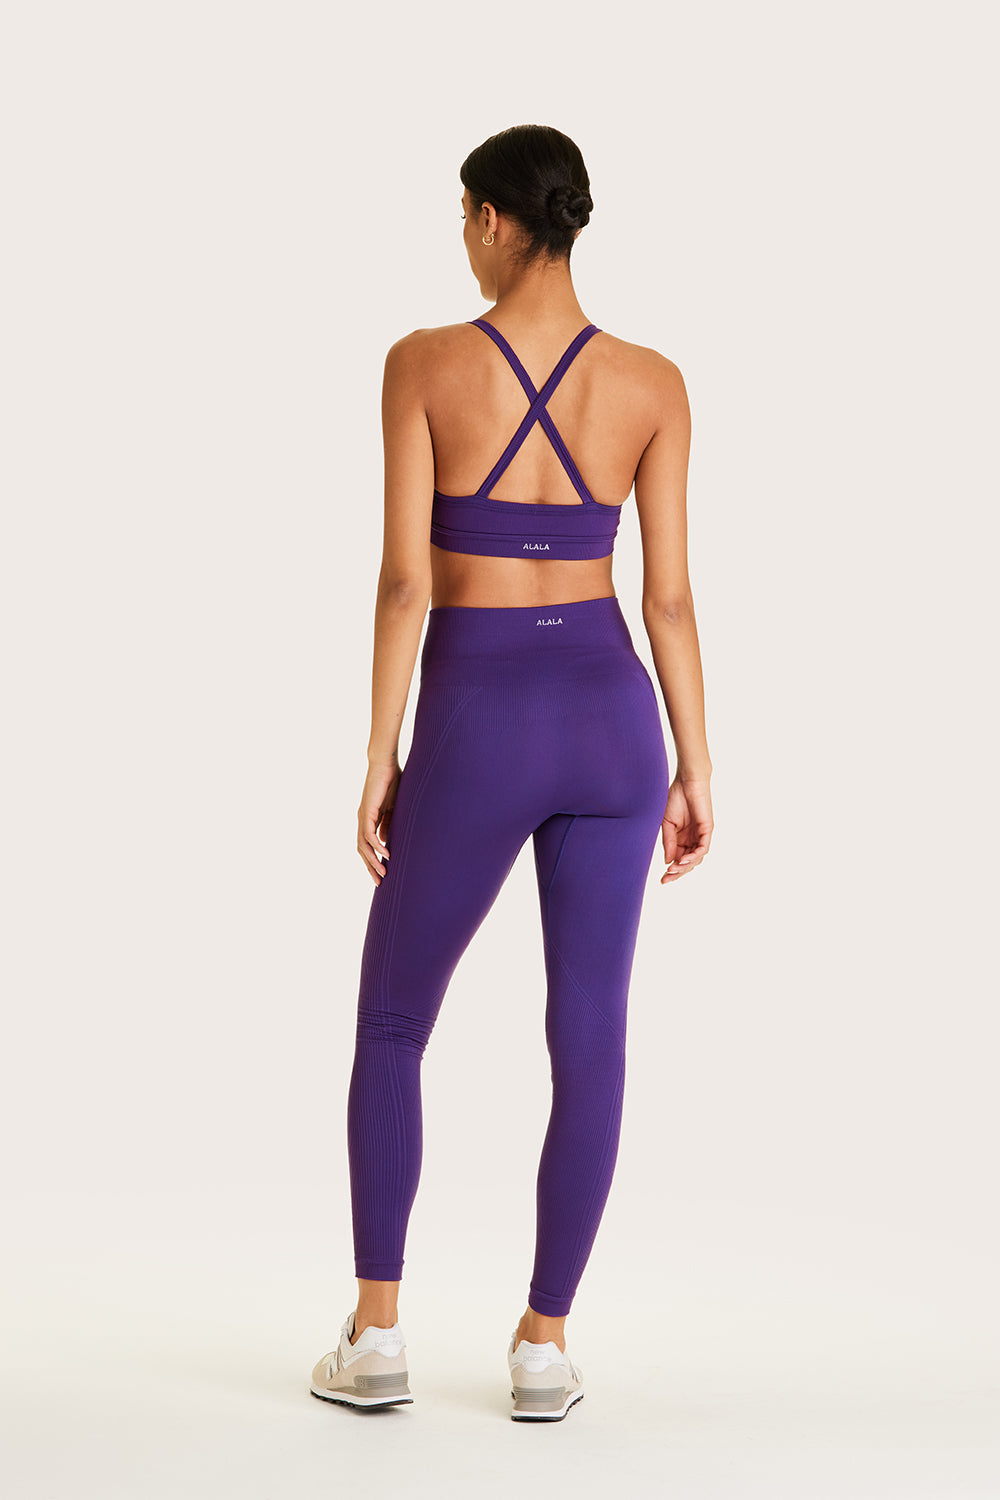 Lululemon Women's Tank Top Shirt Connected Sports Bra Yoga Purple Size S/M